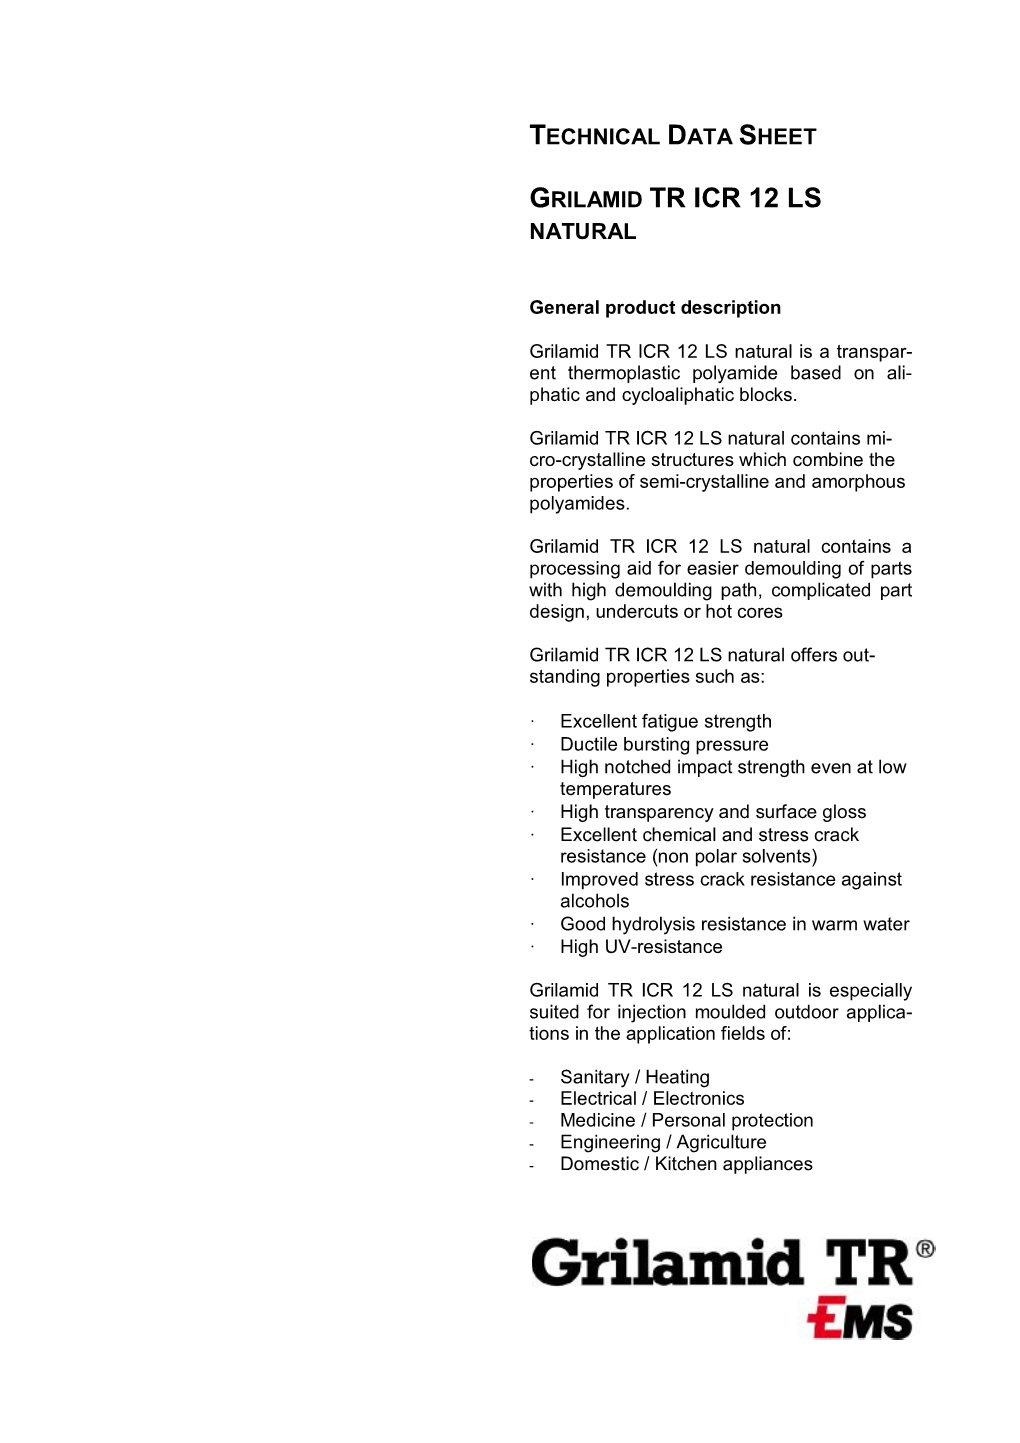 Technical Data Sheet Grilamid Tr Icr 12 Ls